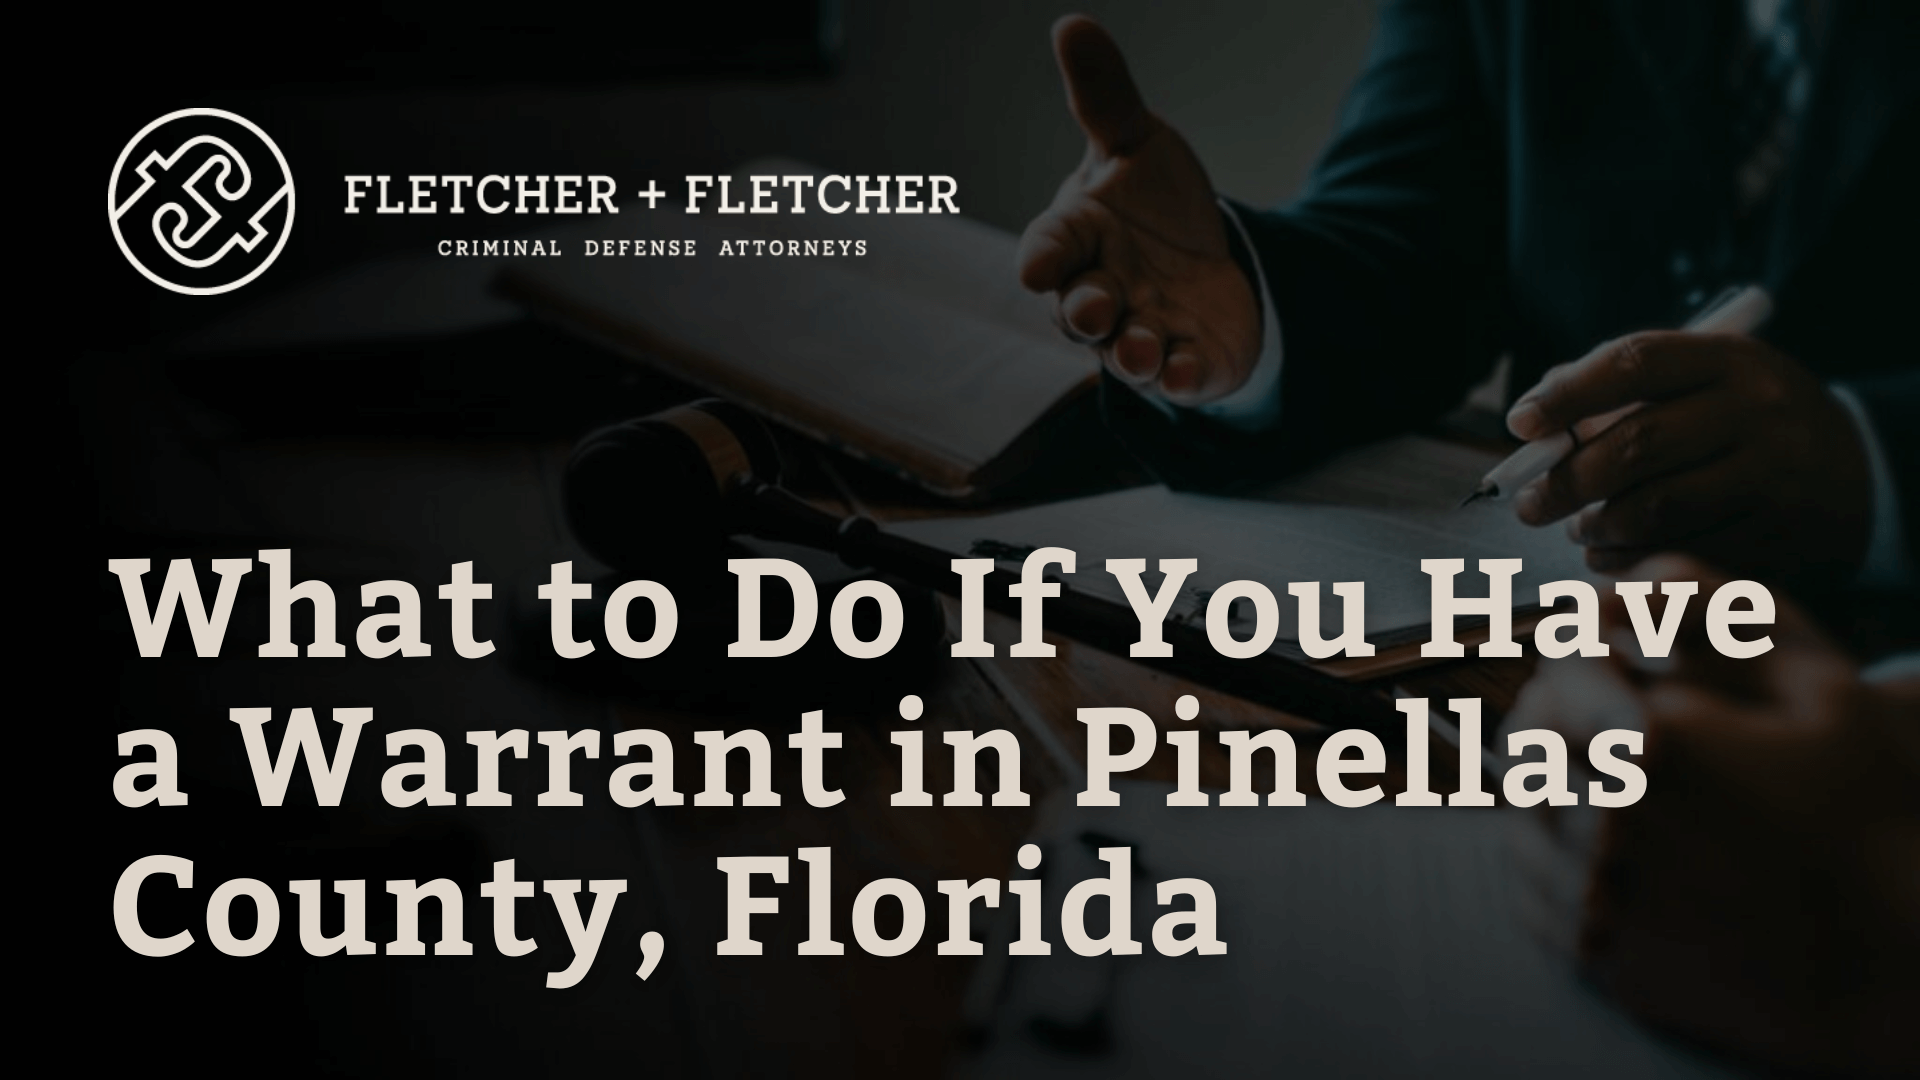 Warrant in Pinellas County, Florida - fletcher and fletcher - st pete florida criminal defense